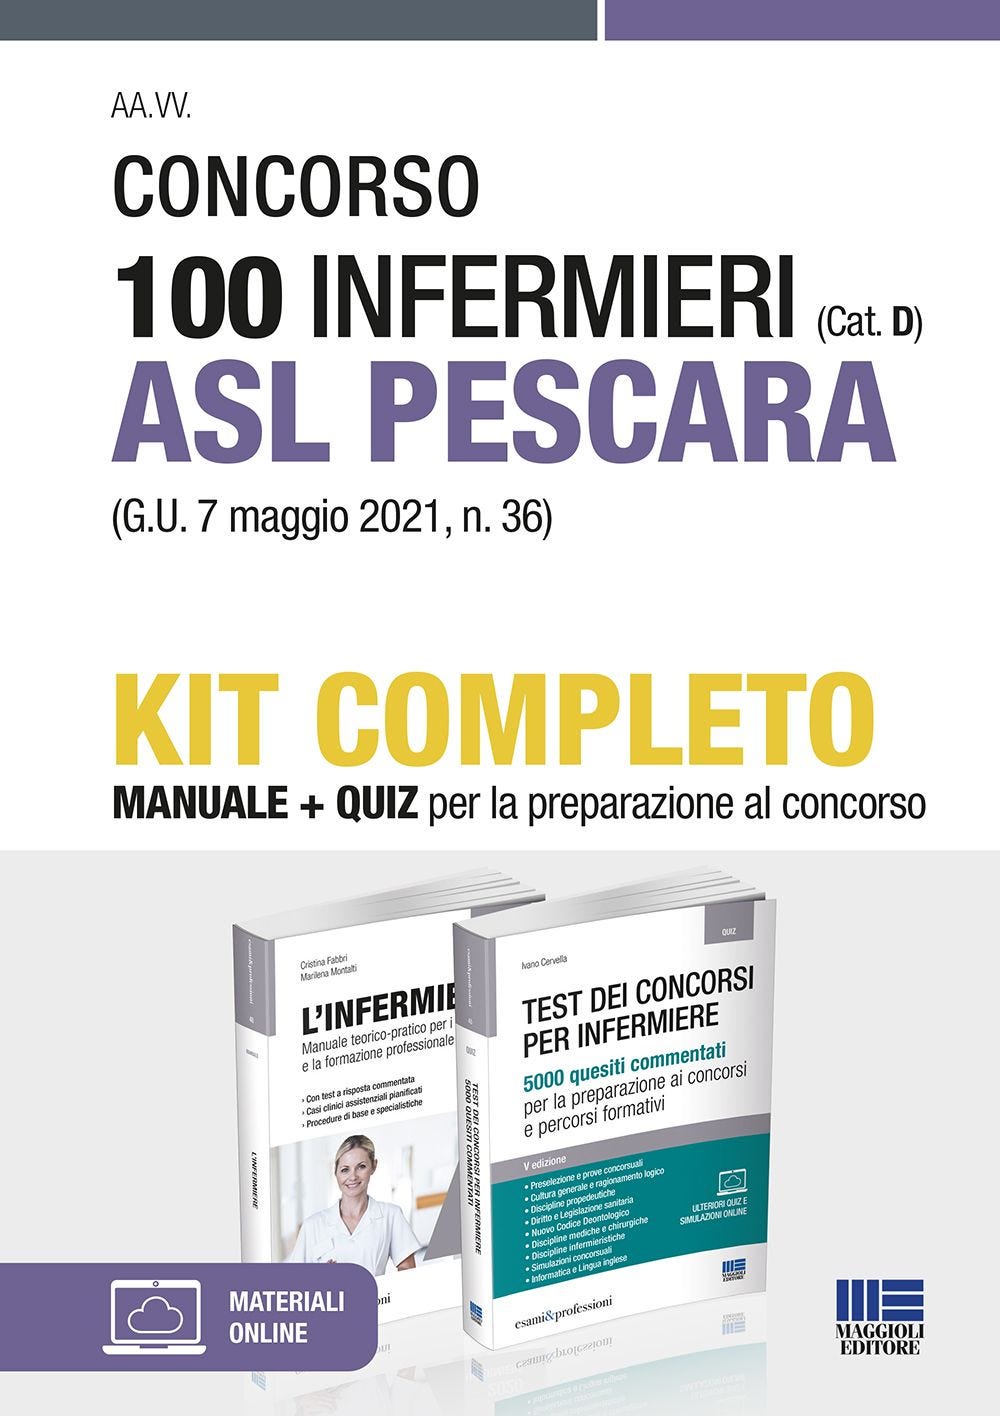 Concorso 100 Infermieri (Cat. D) ASL Pescara (G.U. 7 maggio 2021, n. 36) - Kit completo